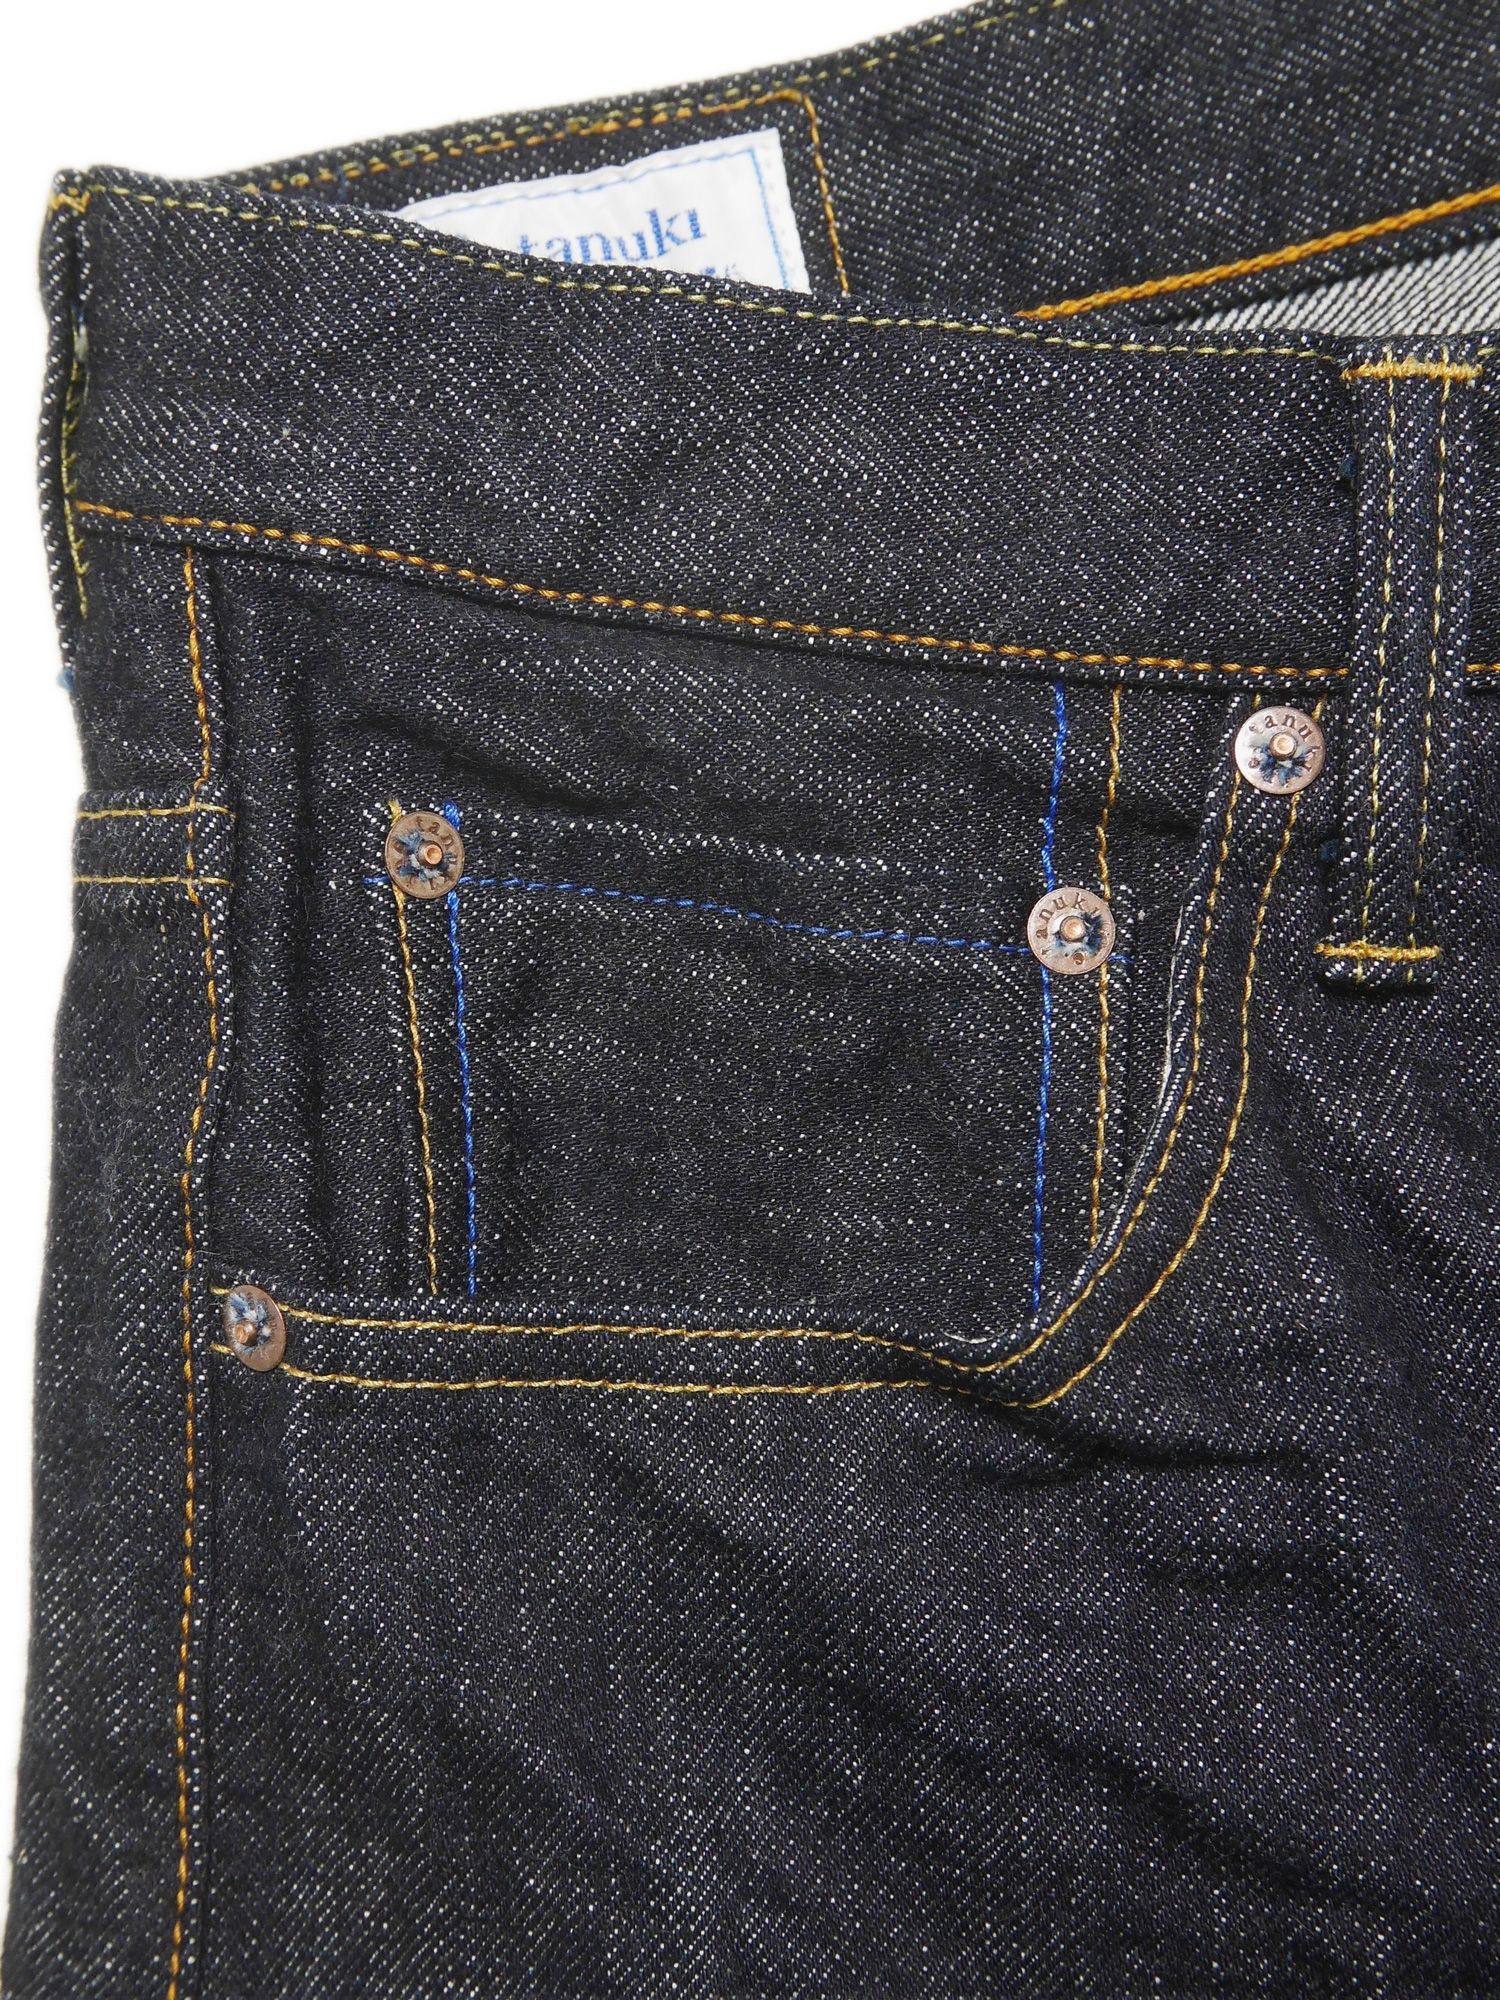 RHT "Retro" High Rise Tapered 15oz Selvedge Jeans